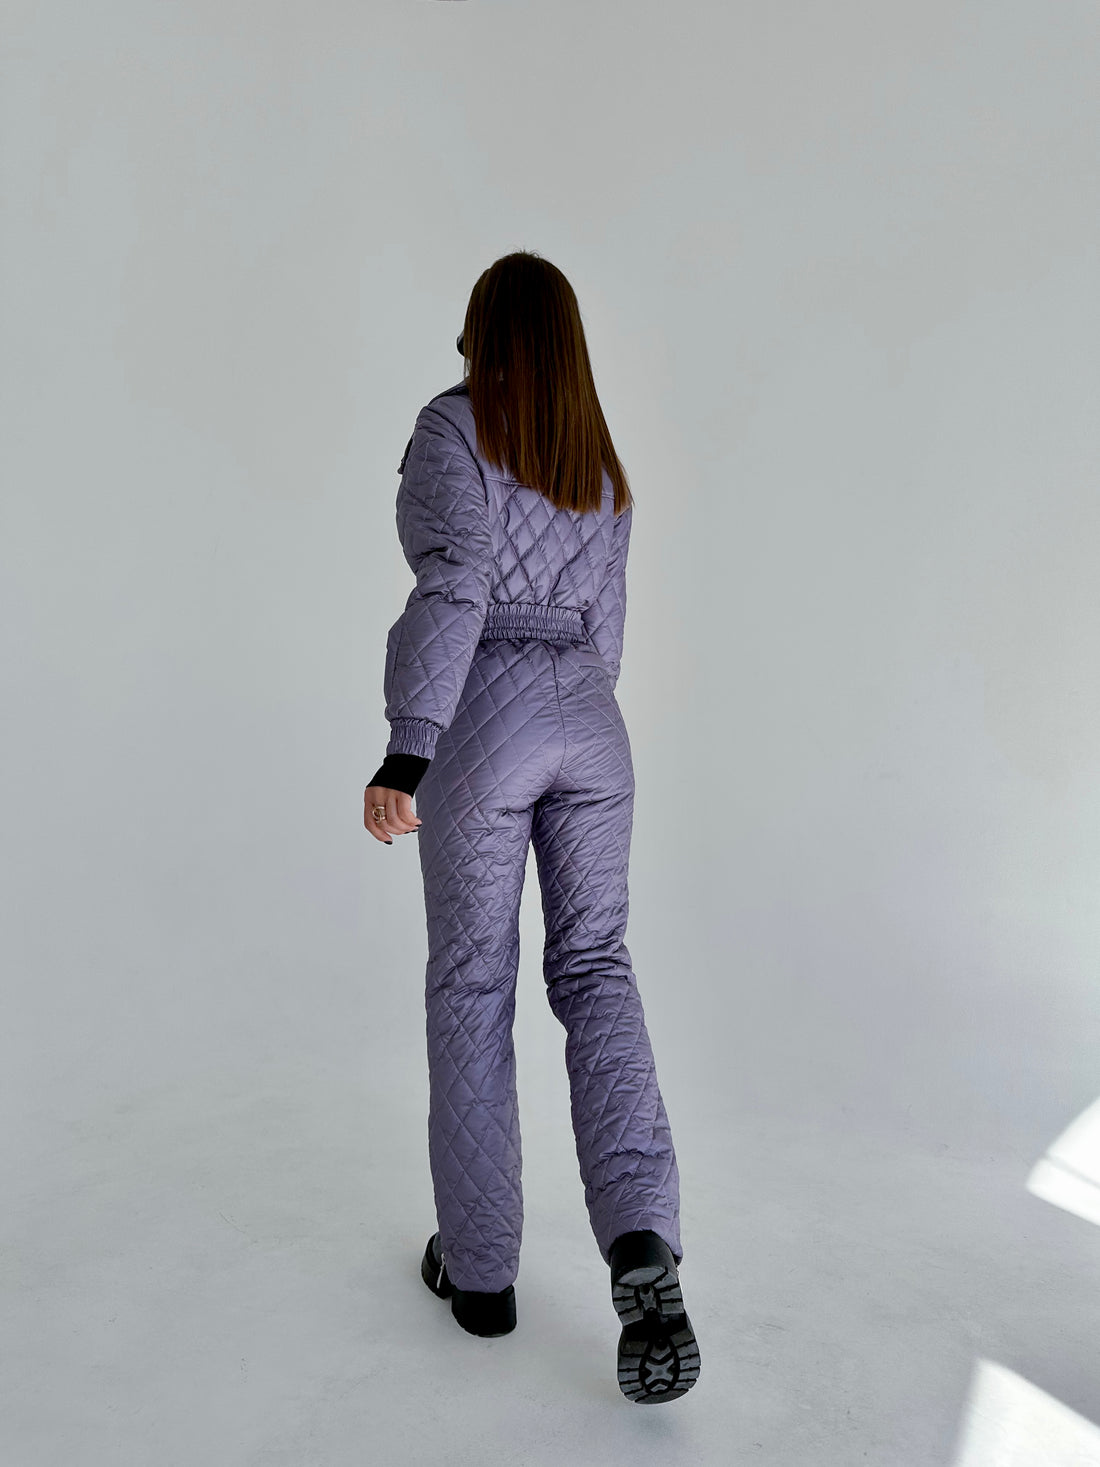 Ski suit overall female violet LUCANIA - PURPLE Ski fashion look old money